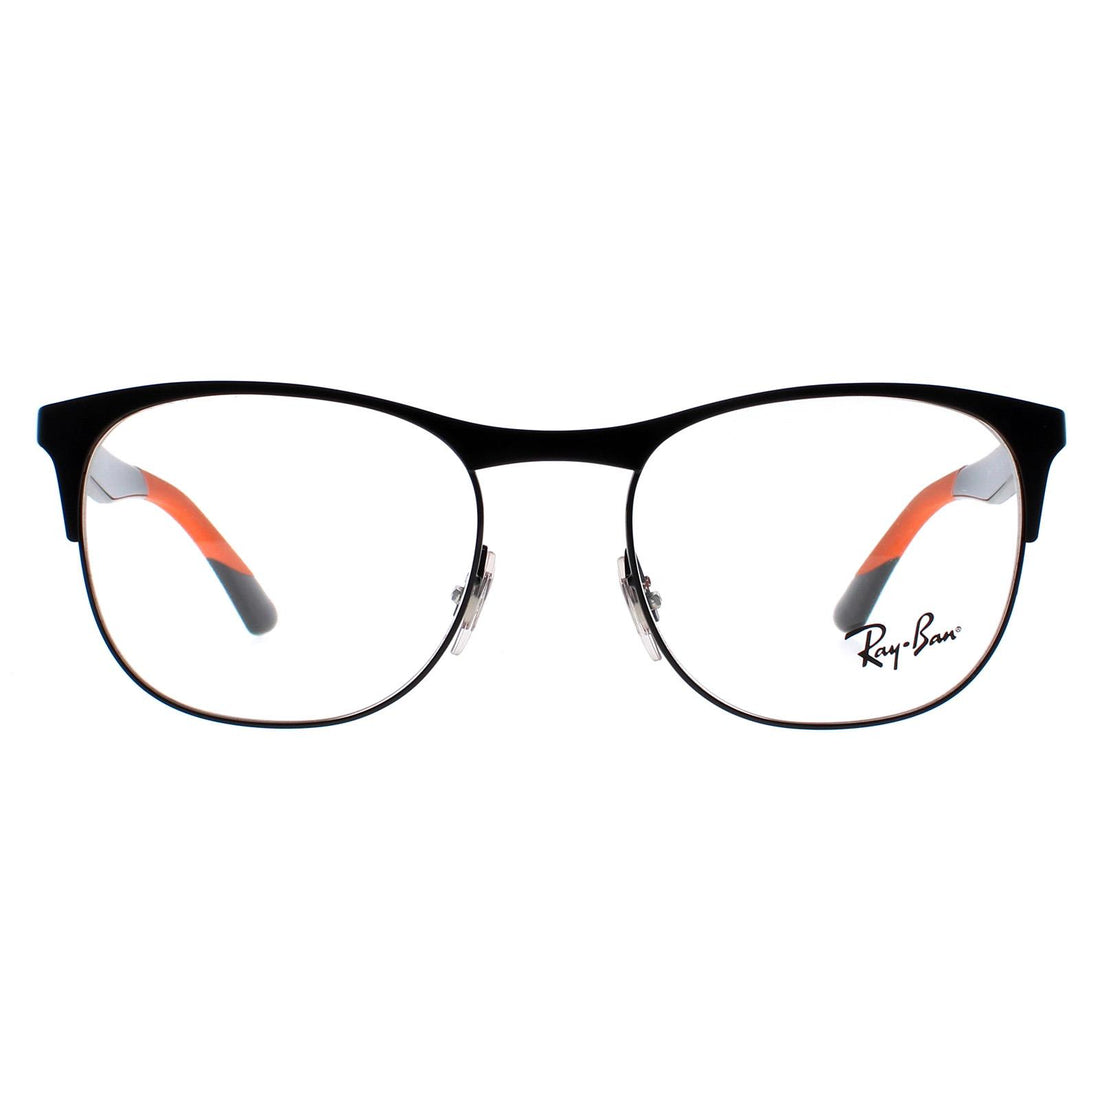 Ray-Ban 6412 Glasses Frames Black 50